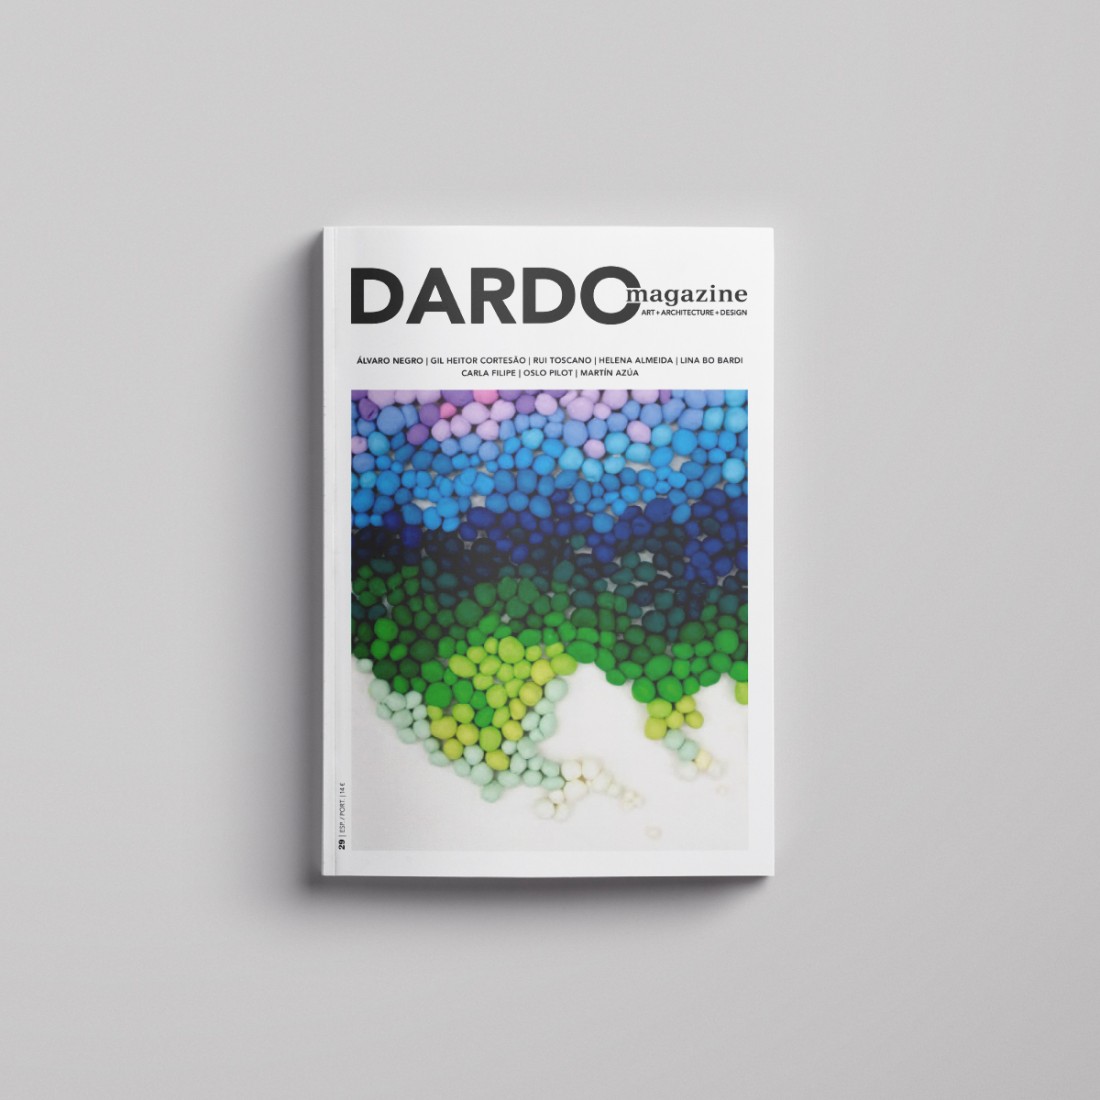 DARDOmagazine 29